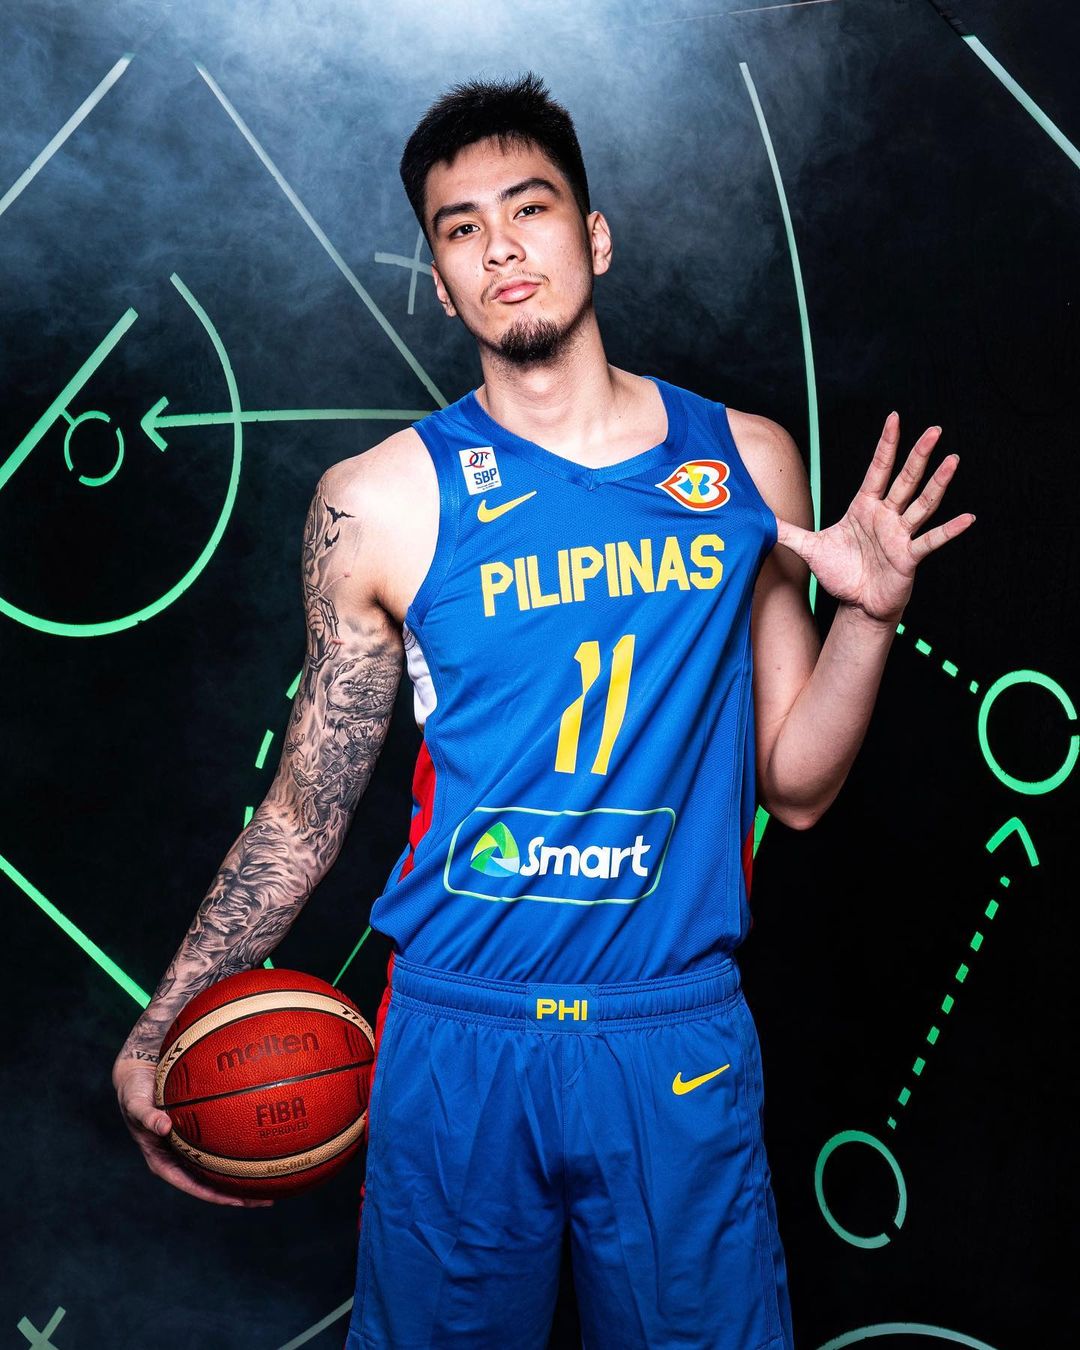 Gilas Pilipinas Merch: Nike Pilipinas Jersey worn by Kai Sotto 